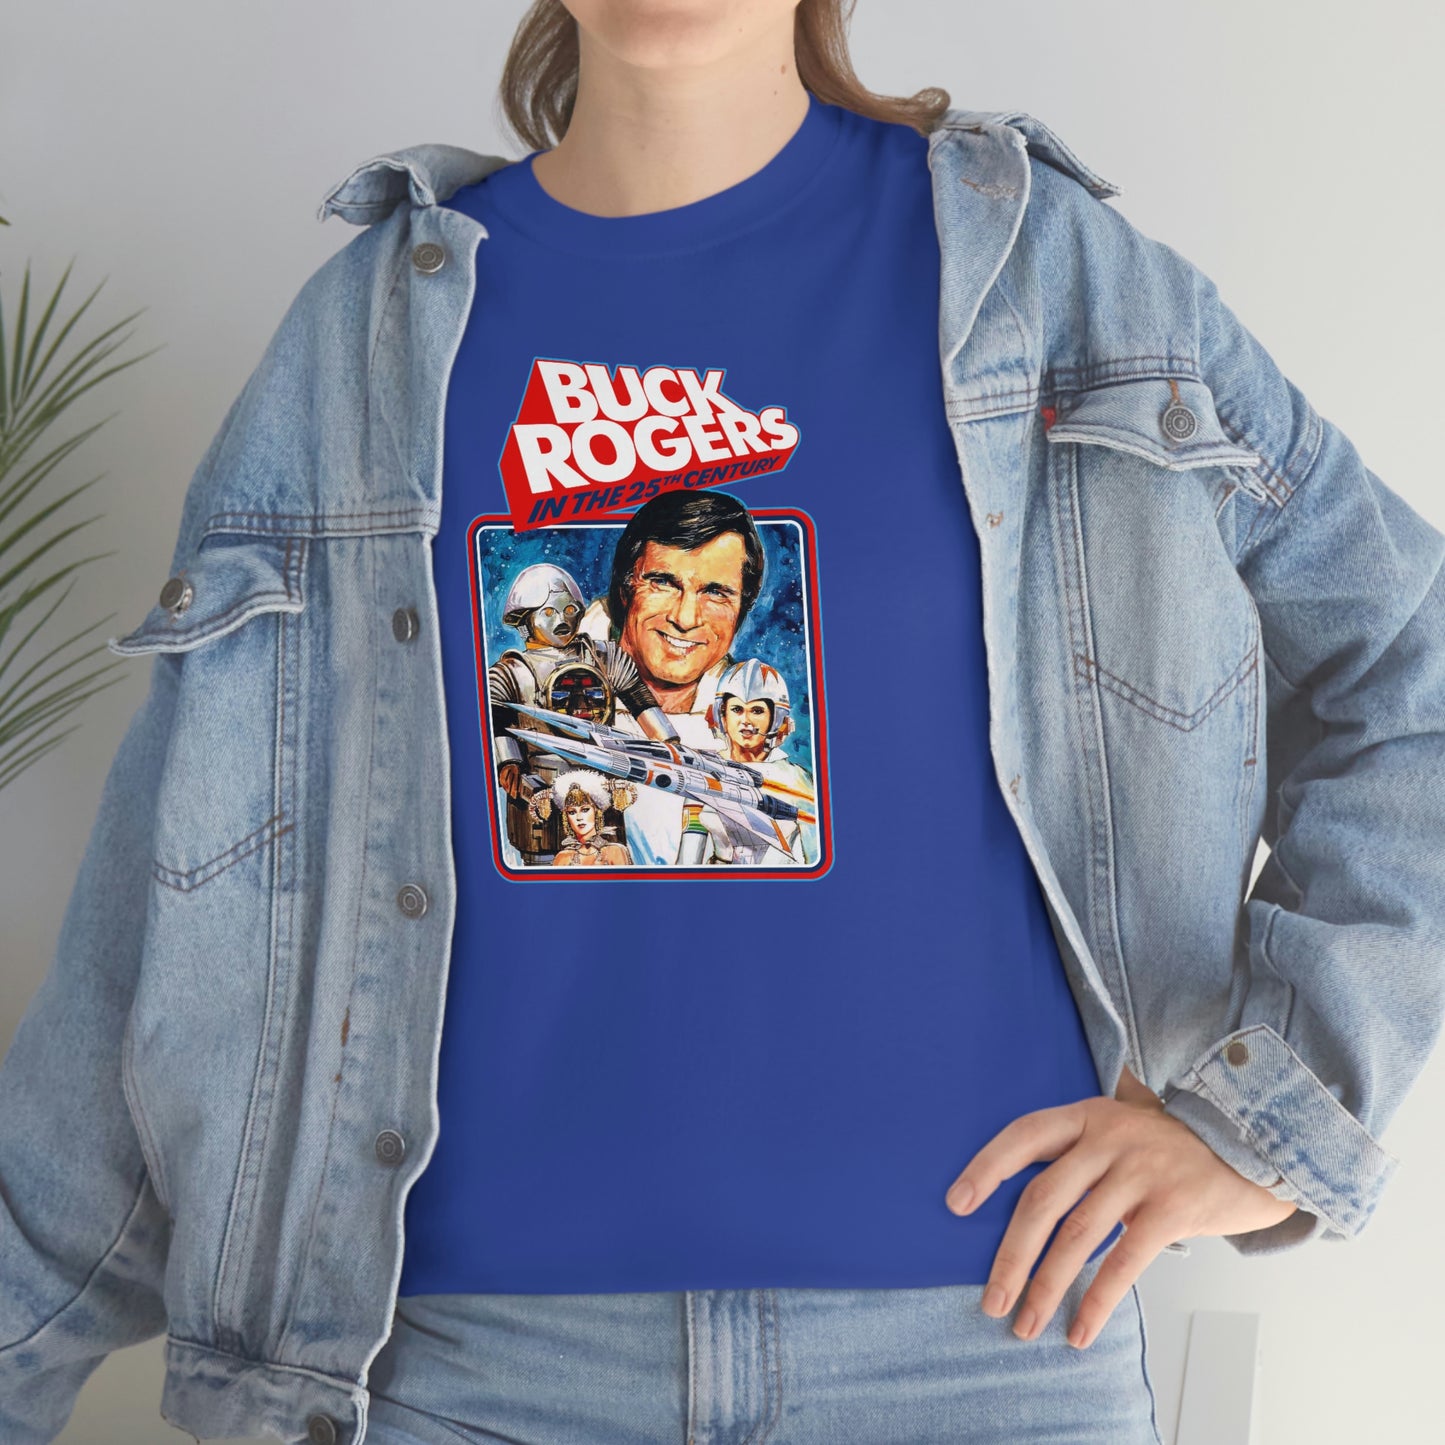 Buck Rogers T-Shirt